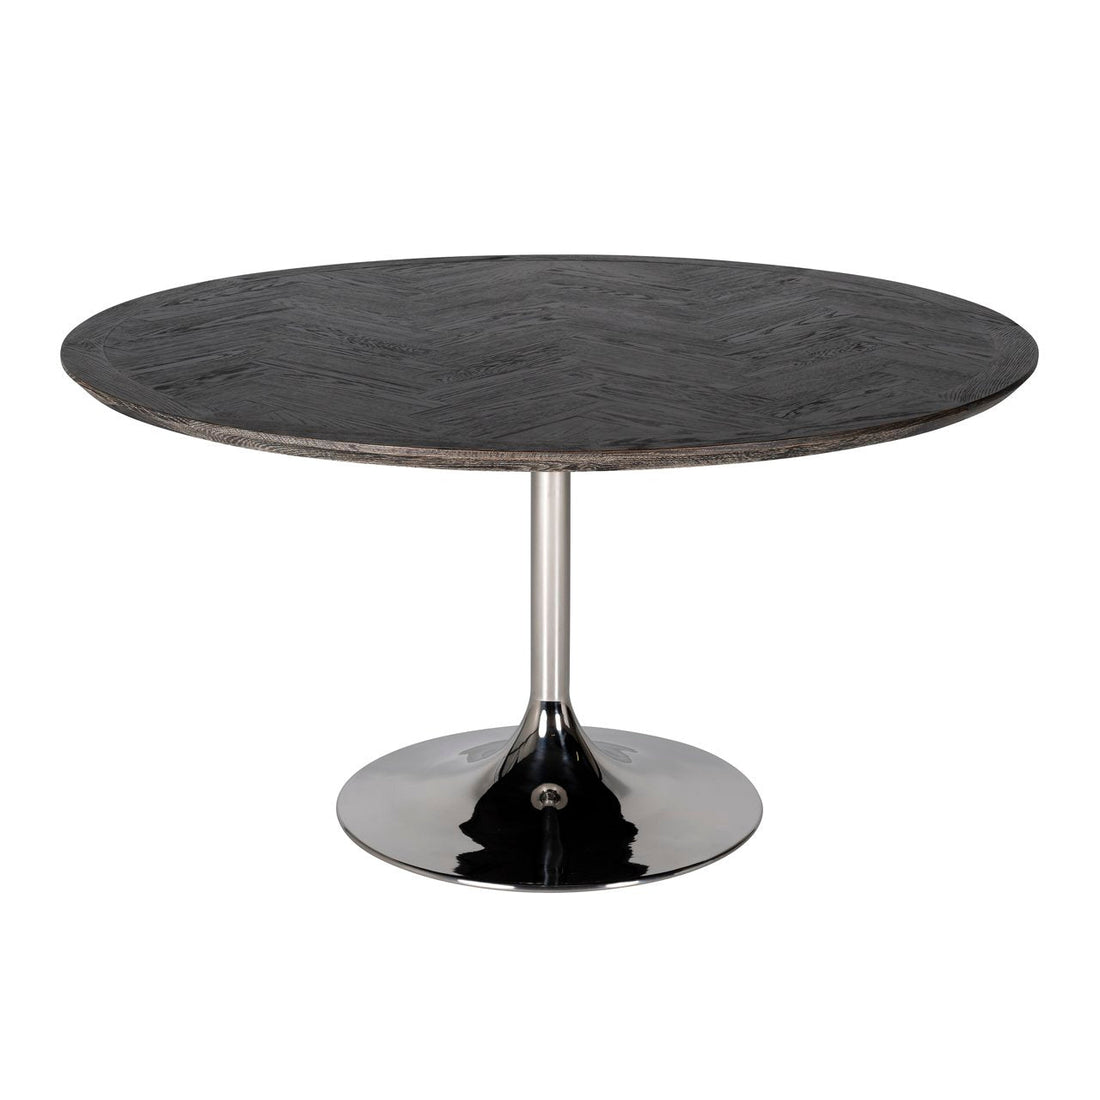 Ronde tafel in zwarte eik met RVS voet | Ø140 cm